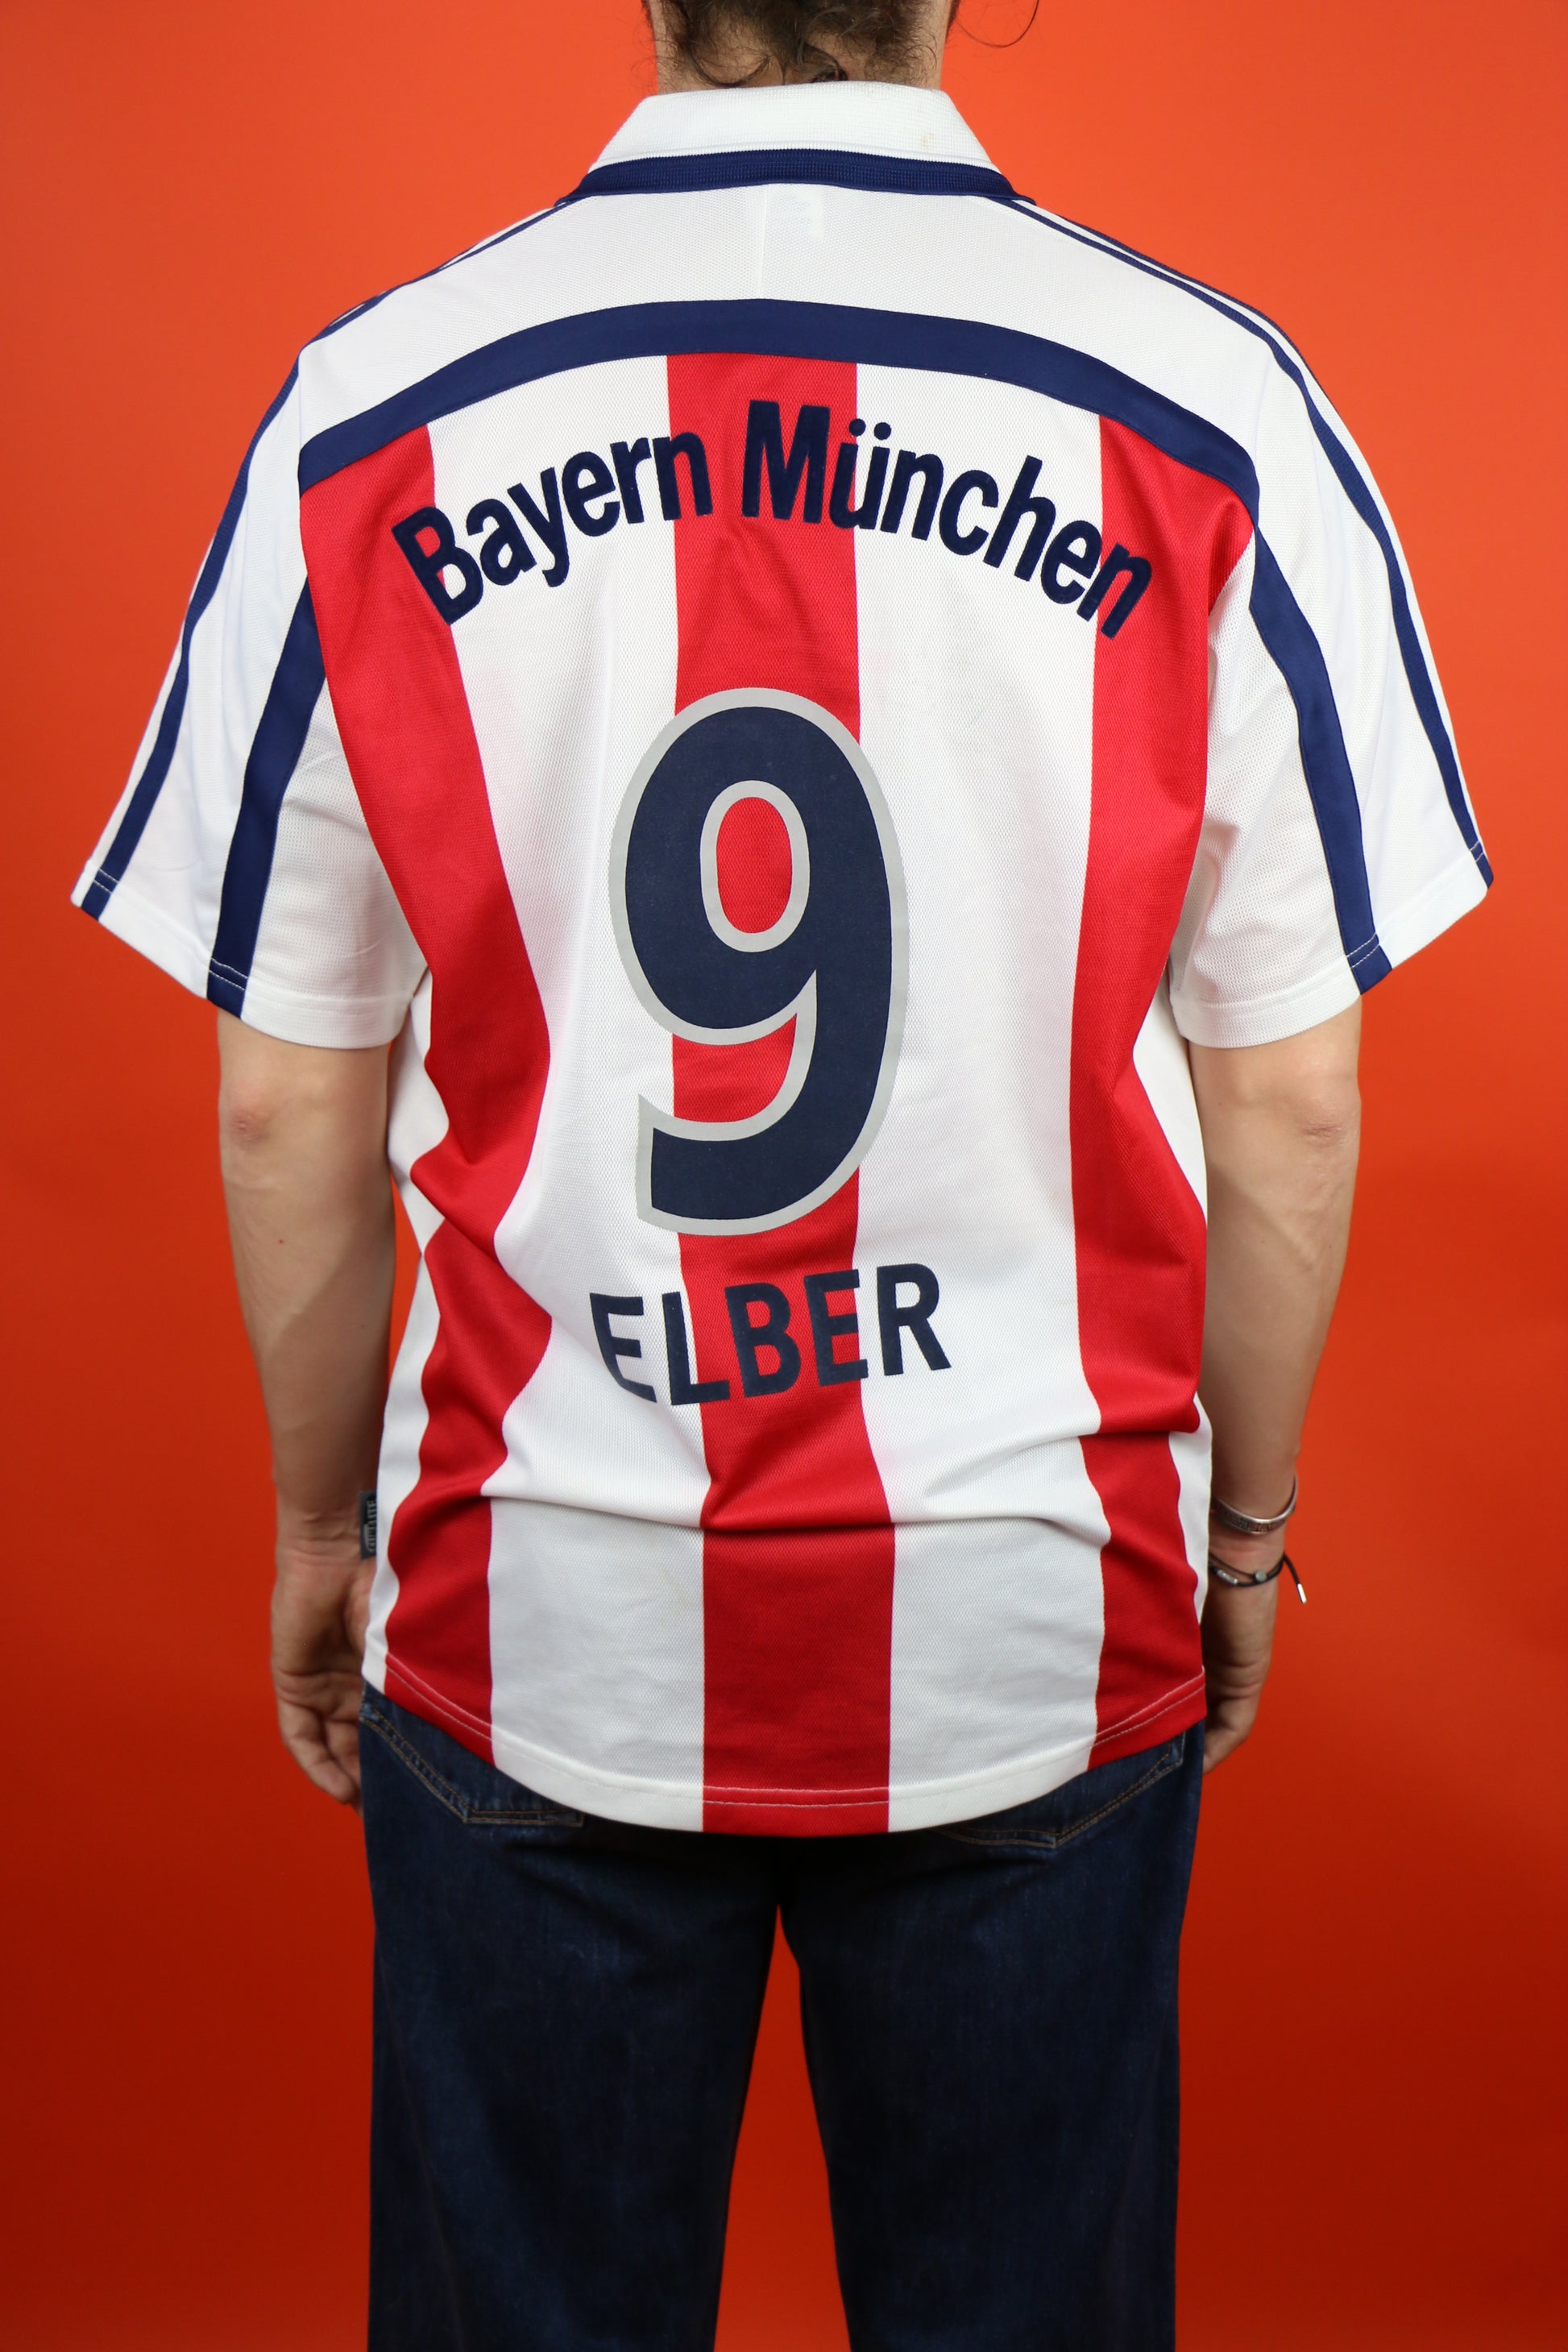 Bayern Munchen Shirt - vintage clothing clochard92.com